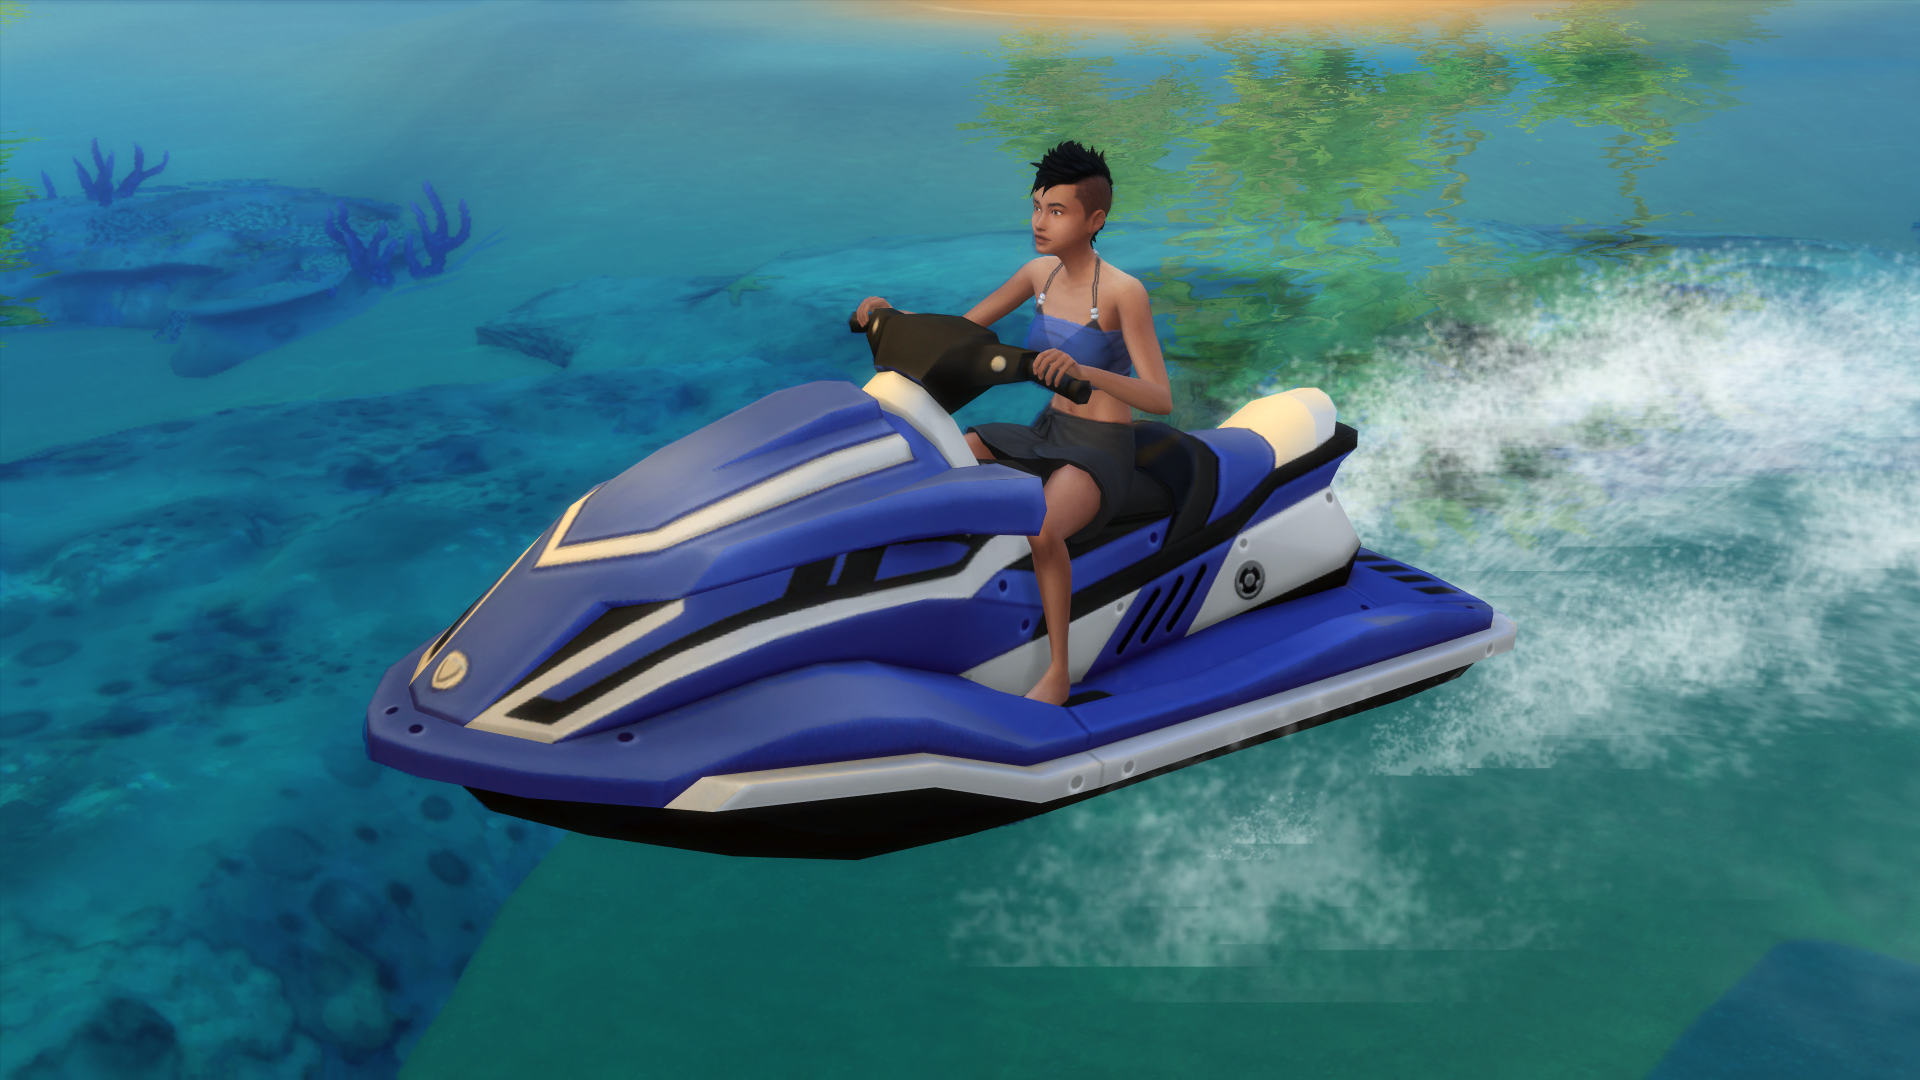 Buy The Sims 4 Plus Island Living Bundle - Origin - Key GLOBAL